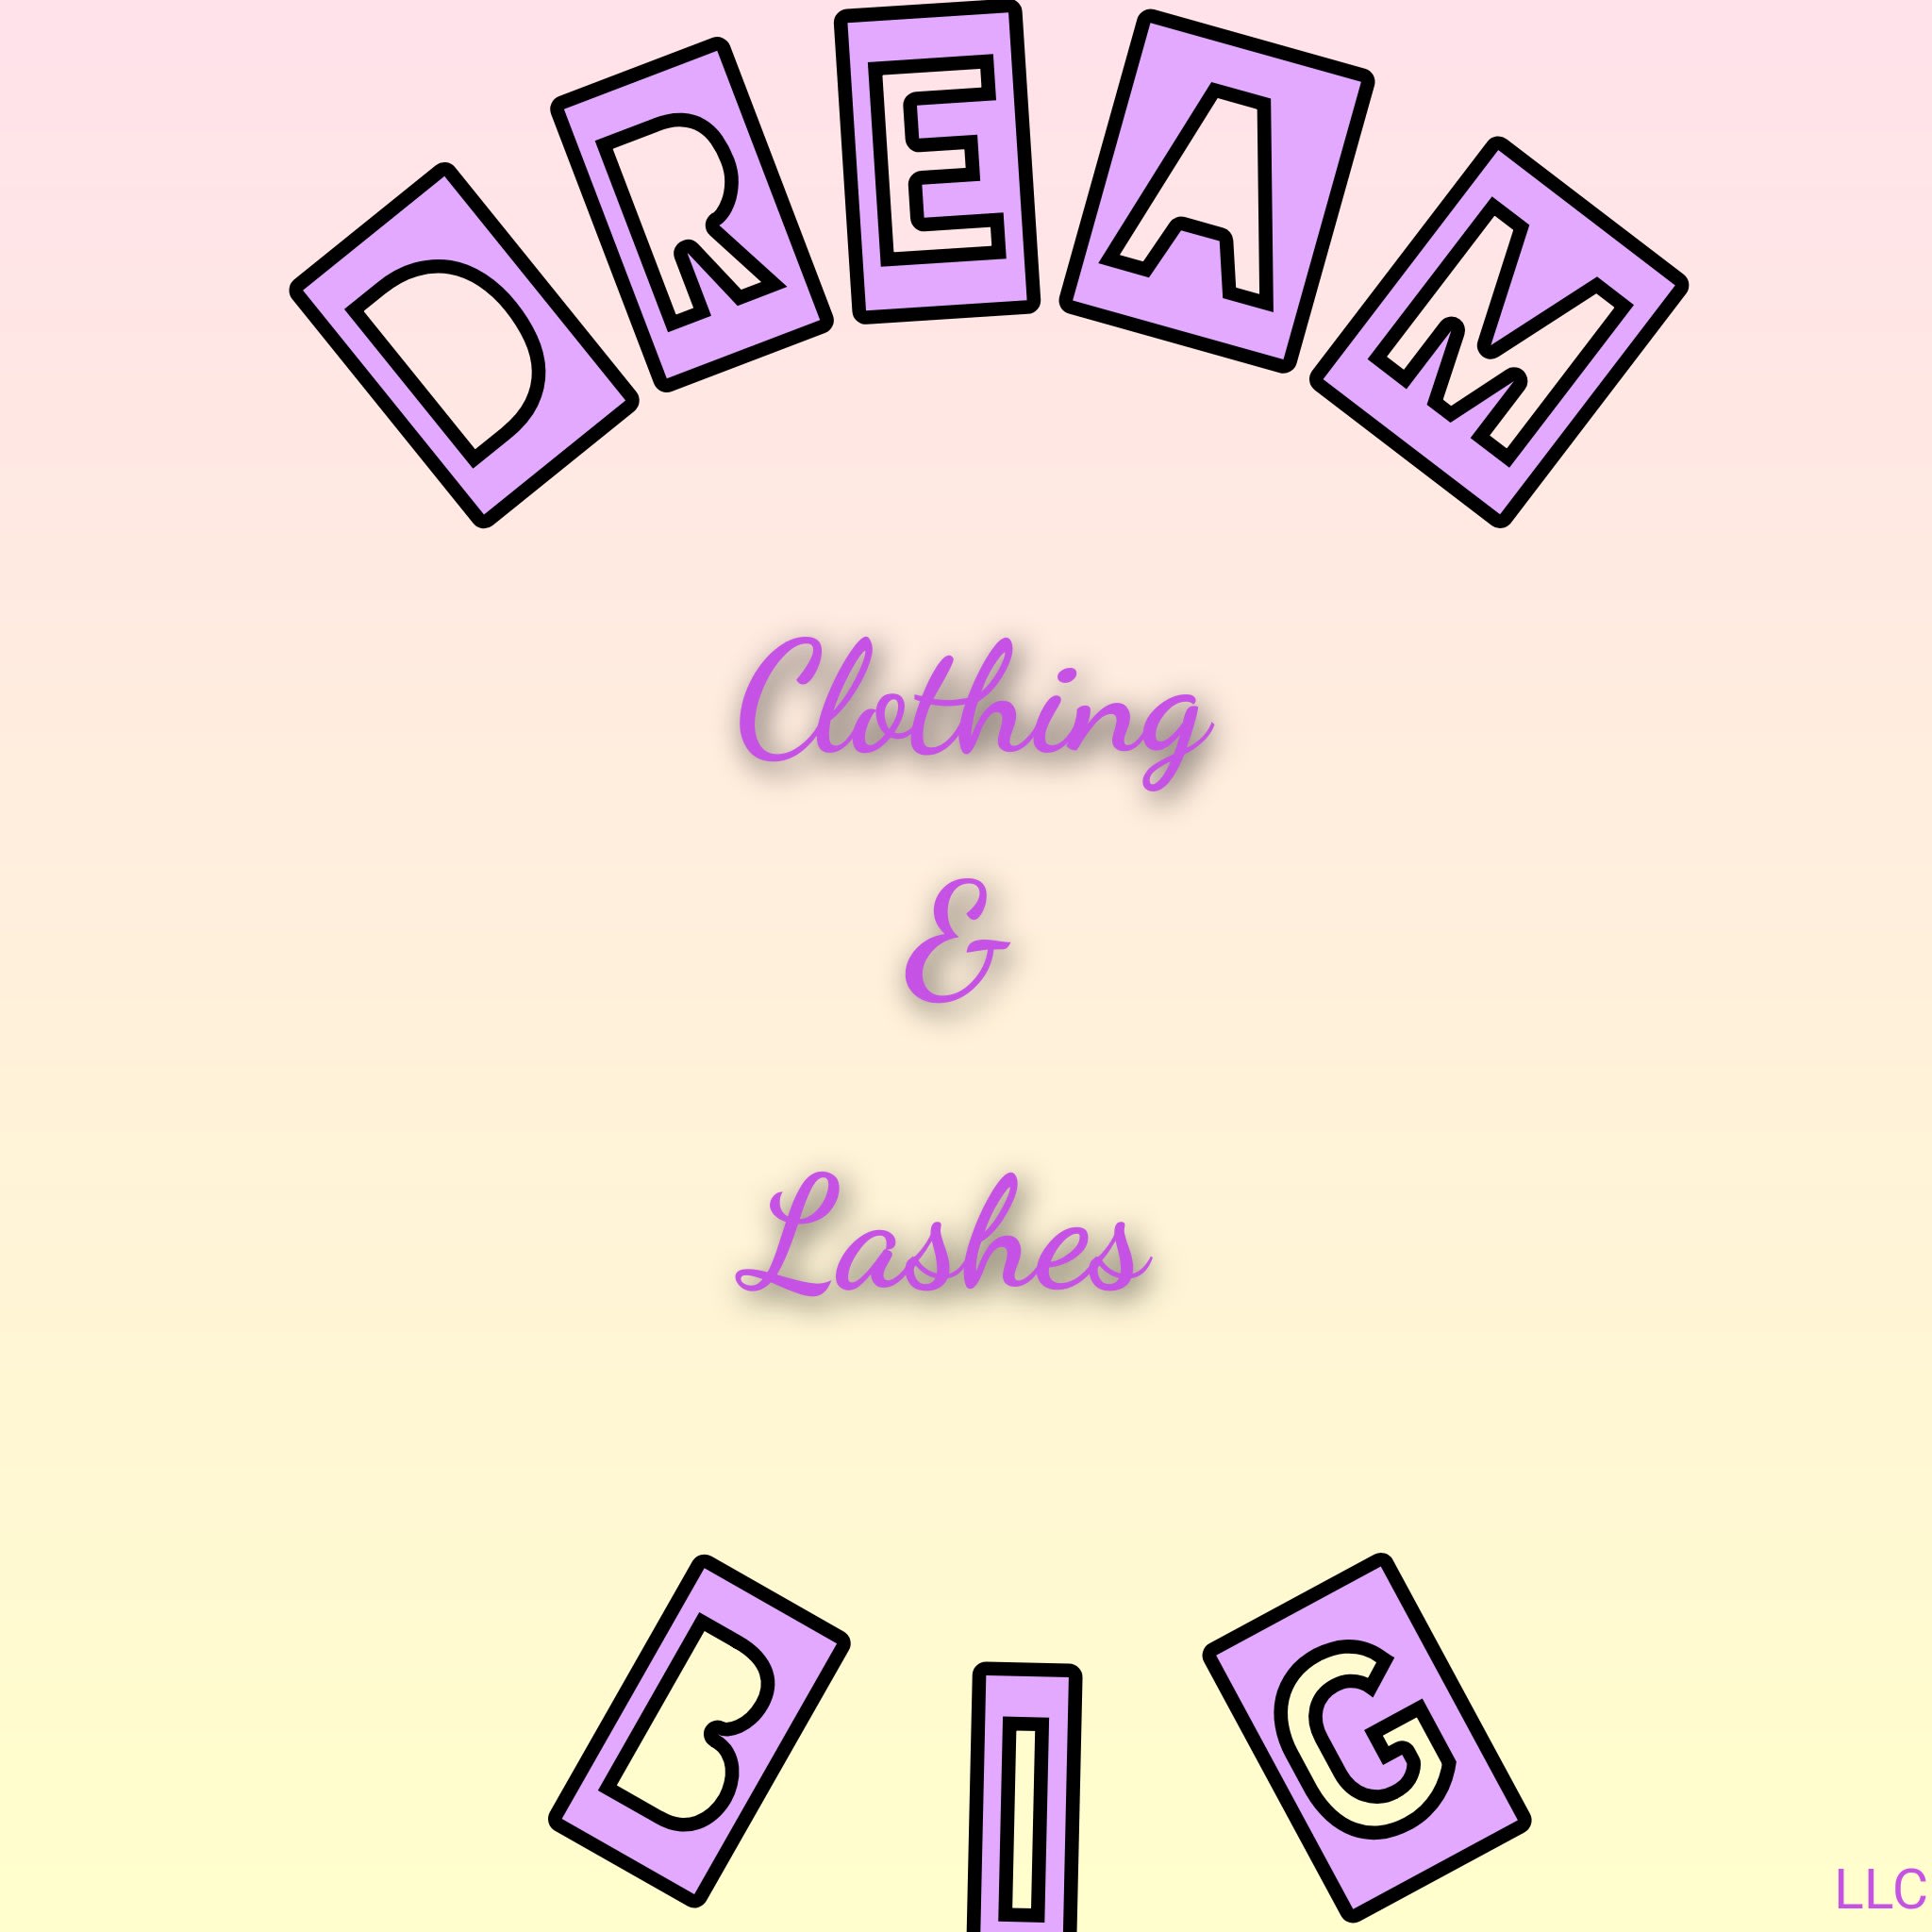 Dream Big Clothing & Lashes